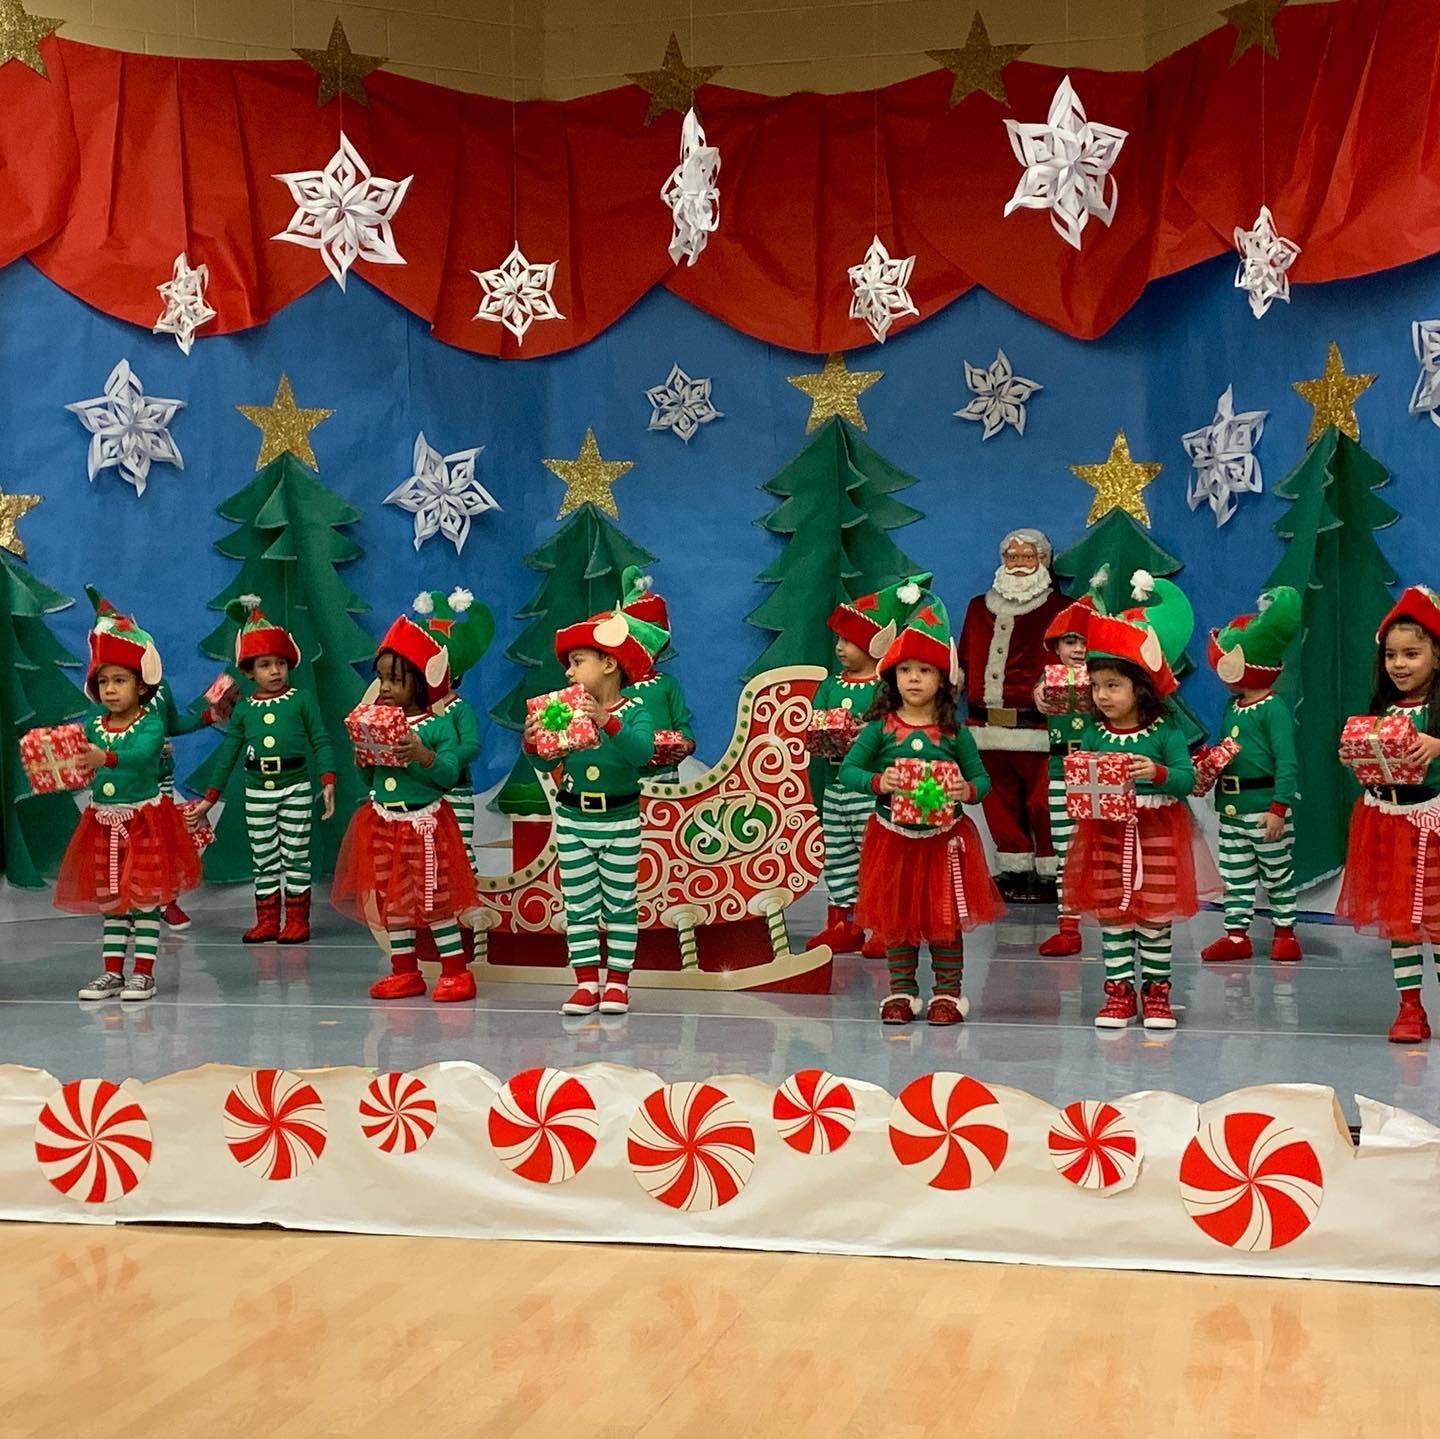 children dressed as elves on stage singing